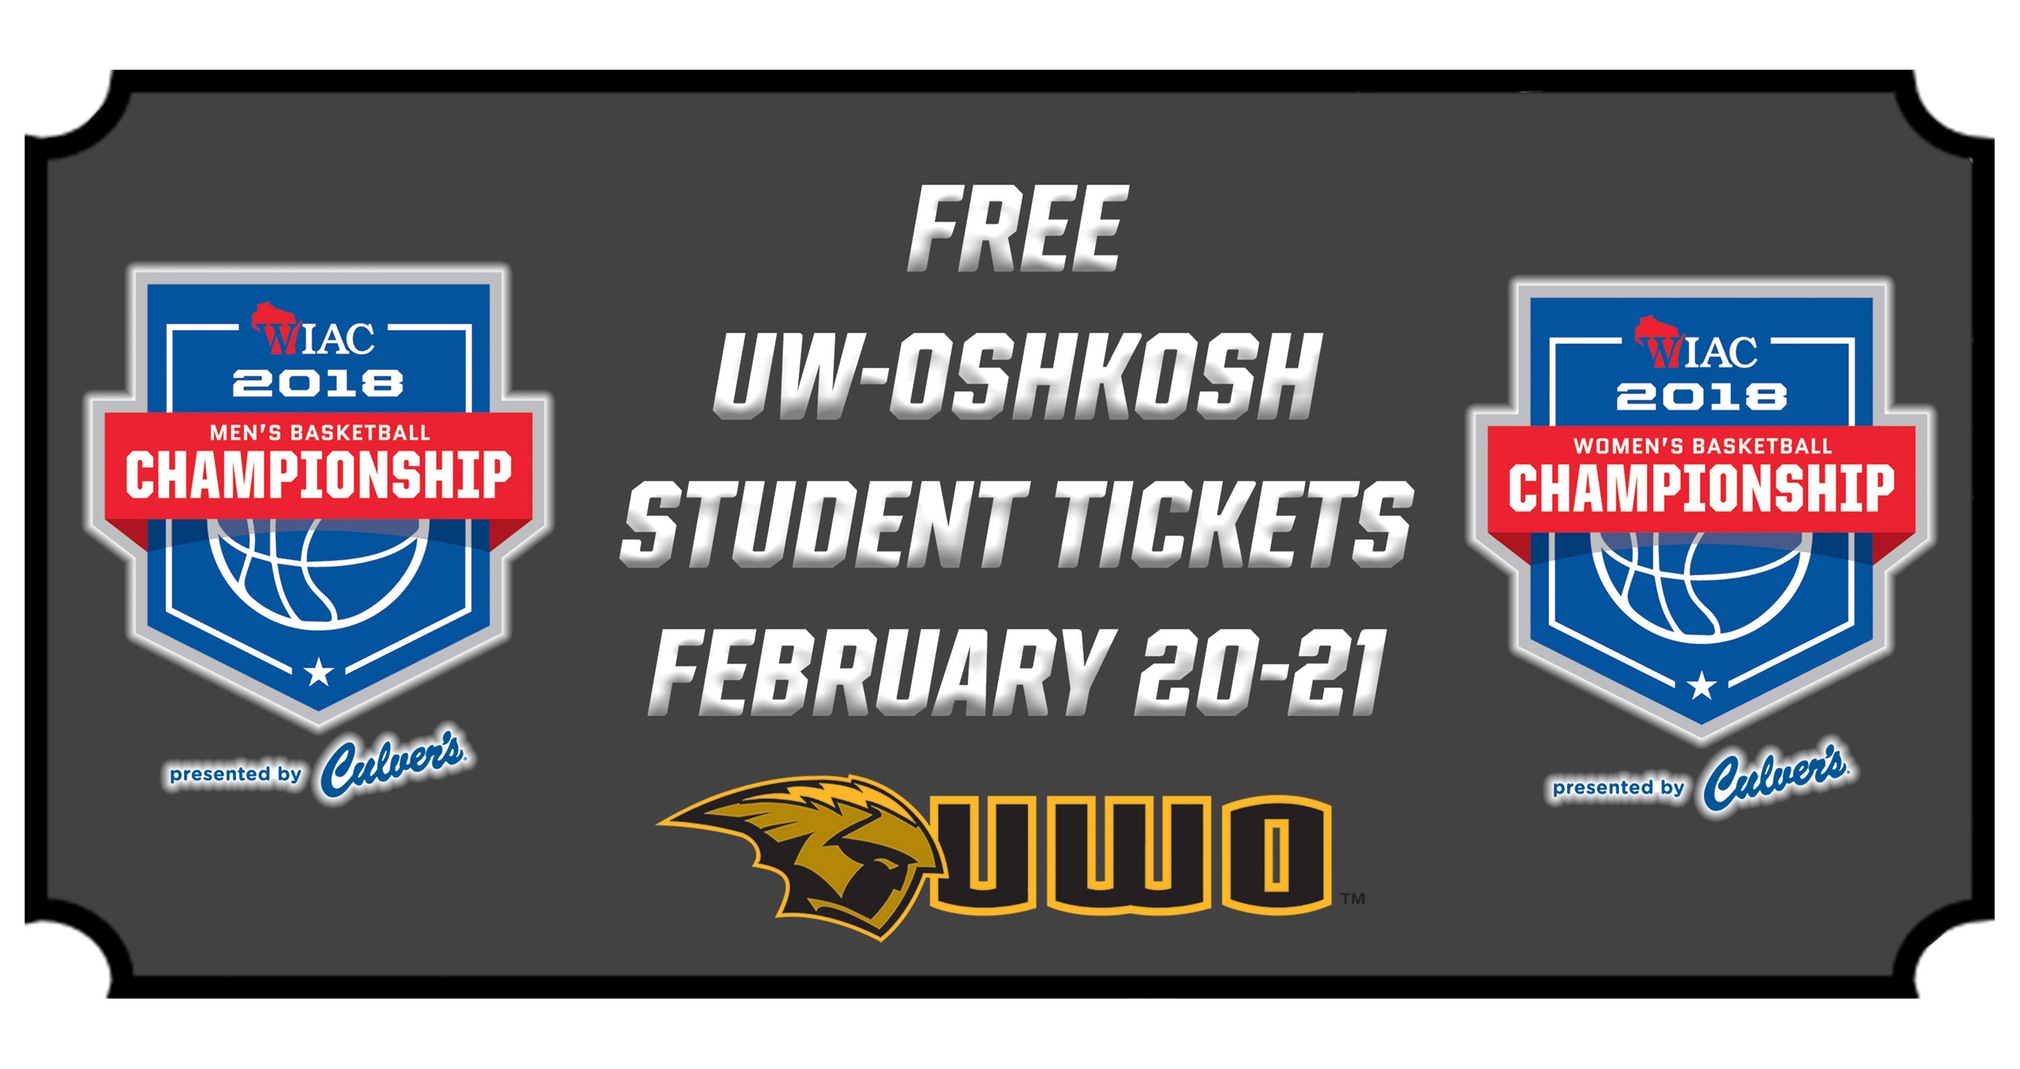 Free WIAC Basketball Championship Tickets Available For UW-Oshkosh Students